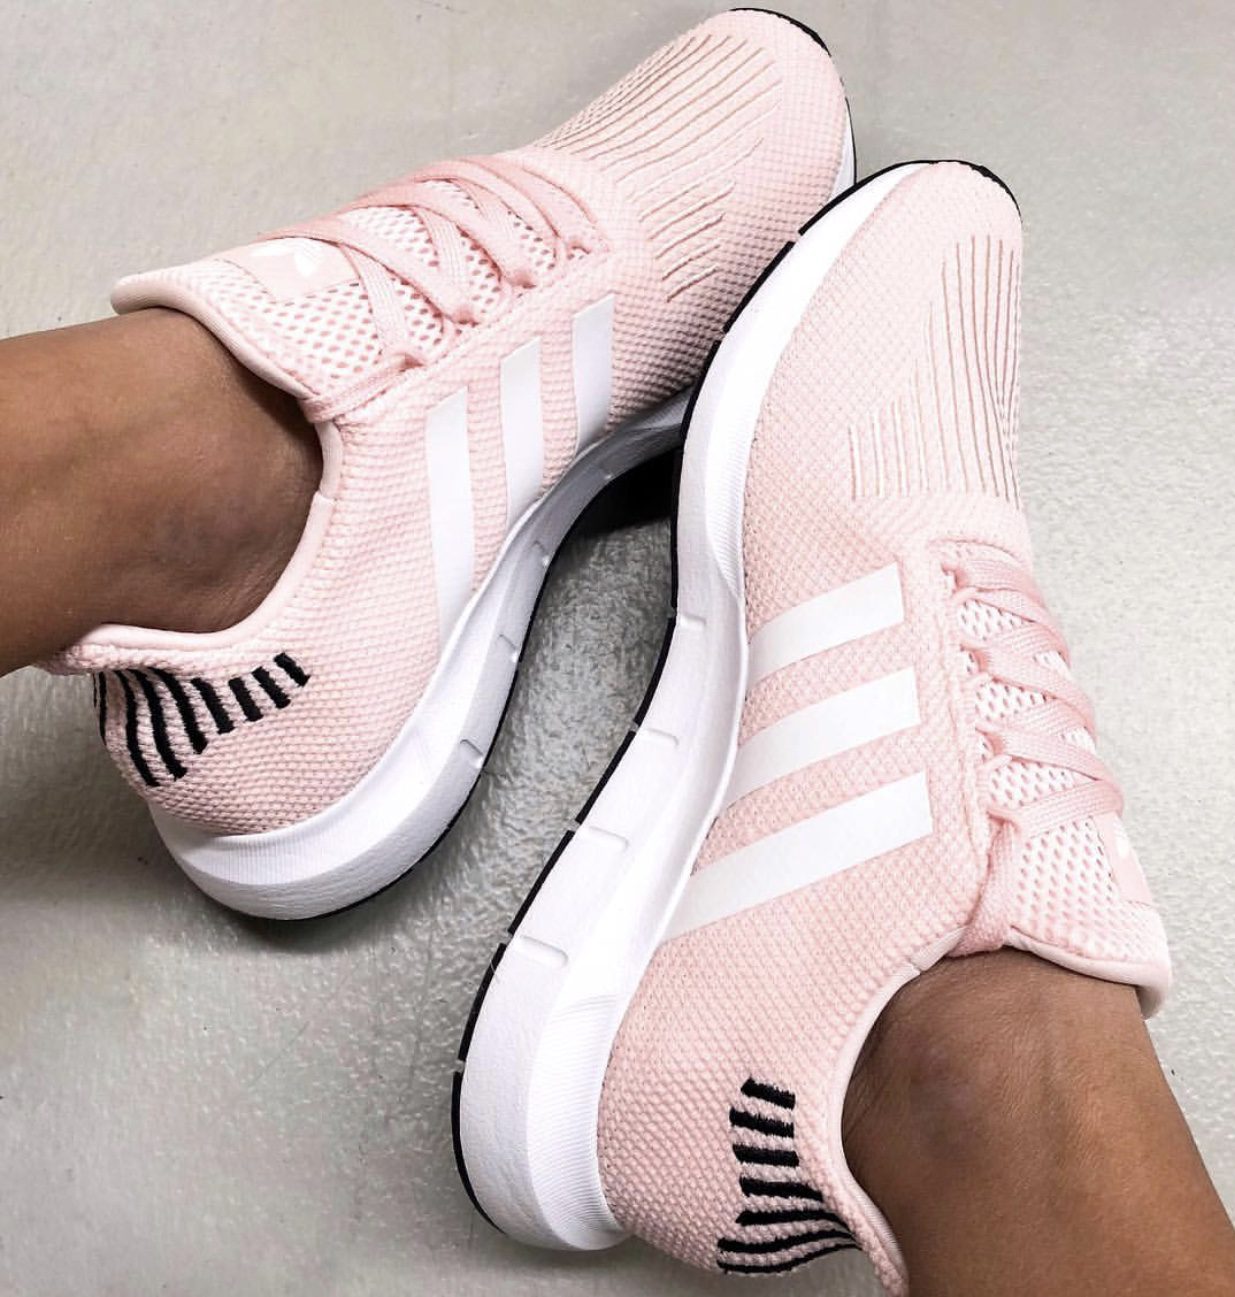 addidas swift run pink